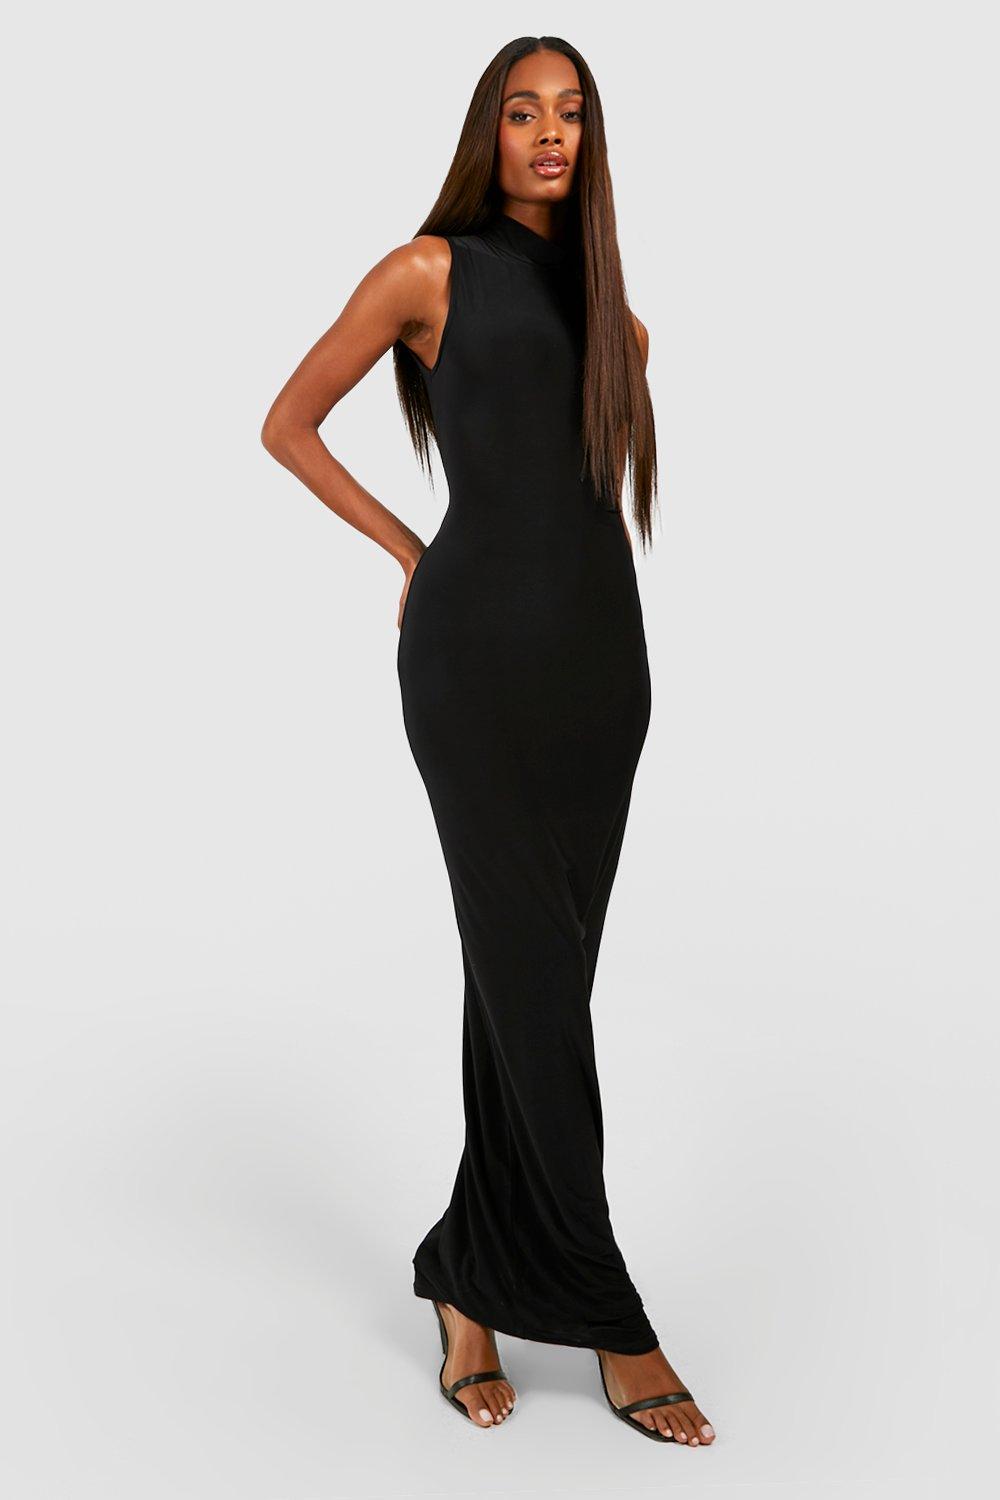 black high neck dress